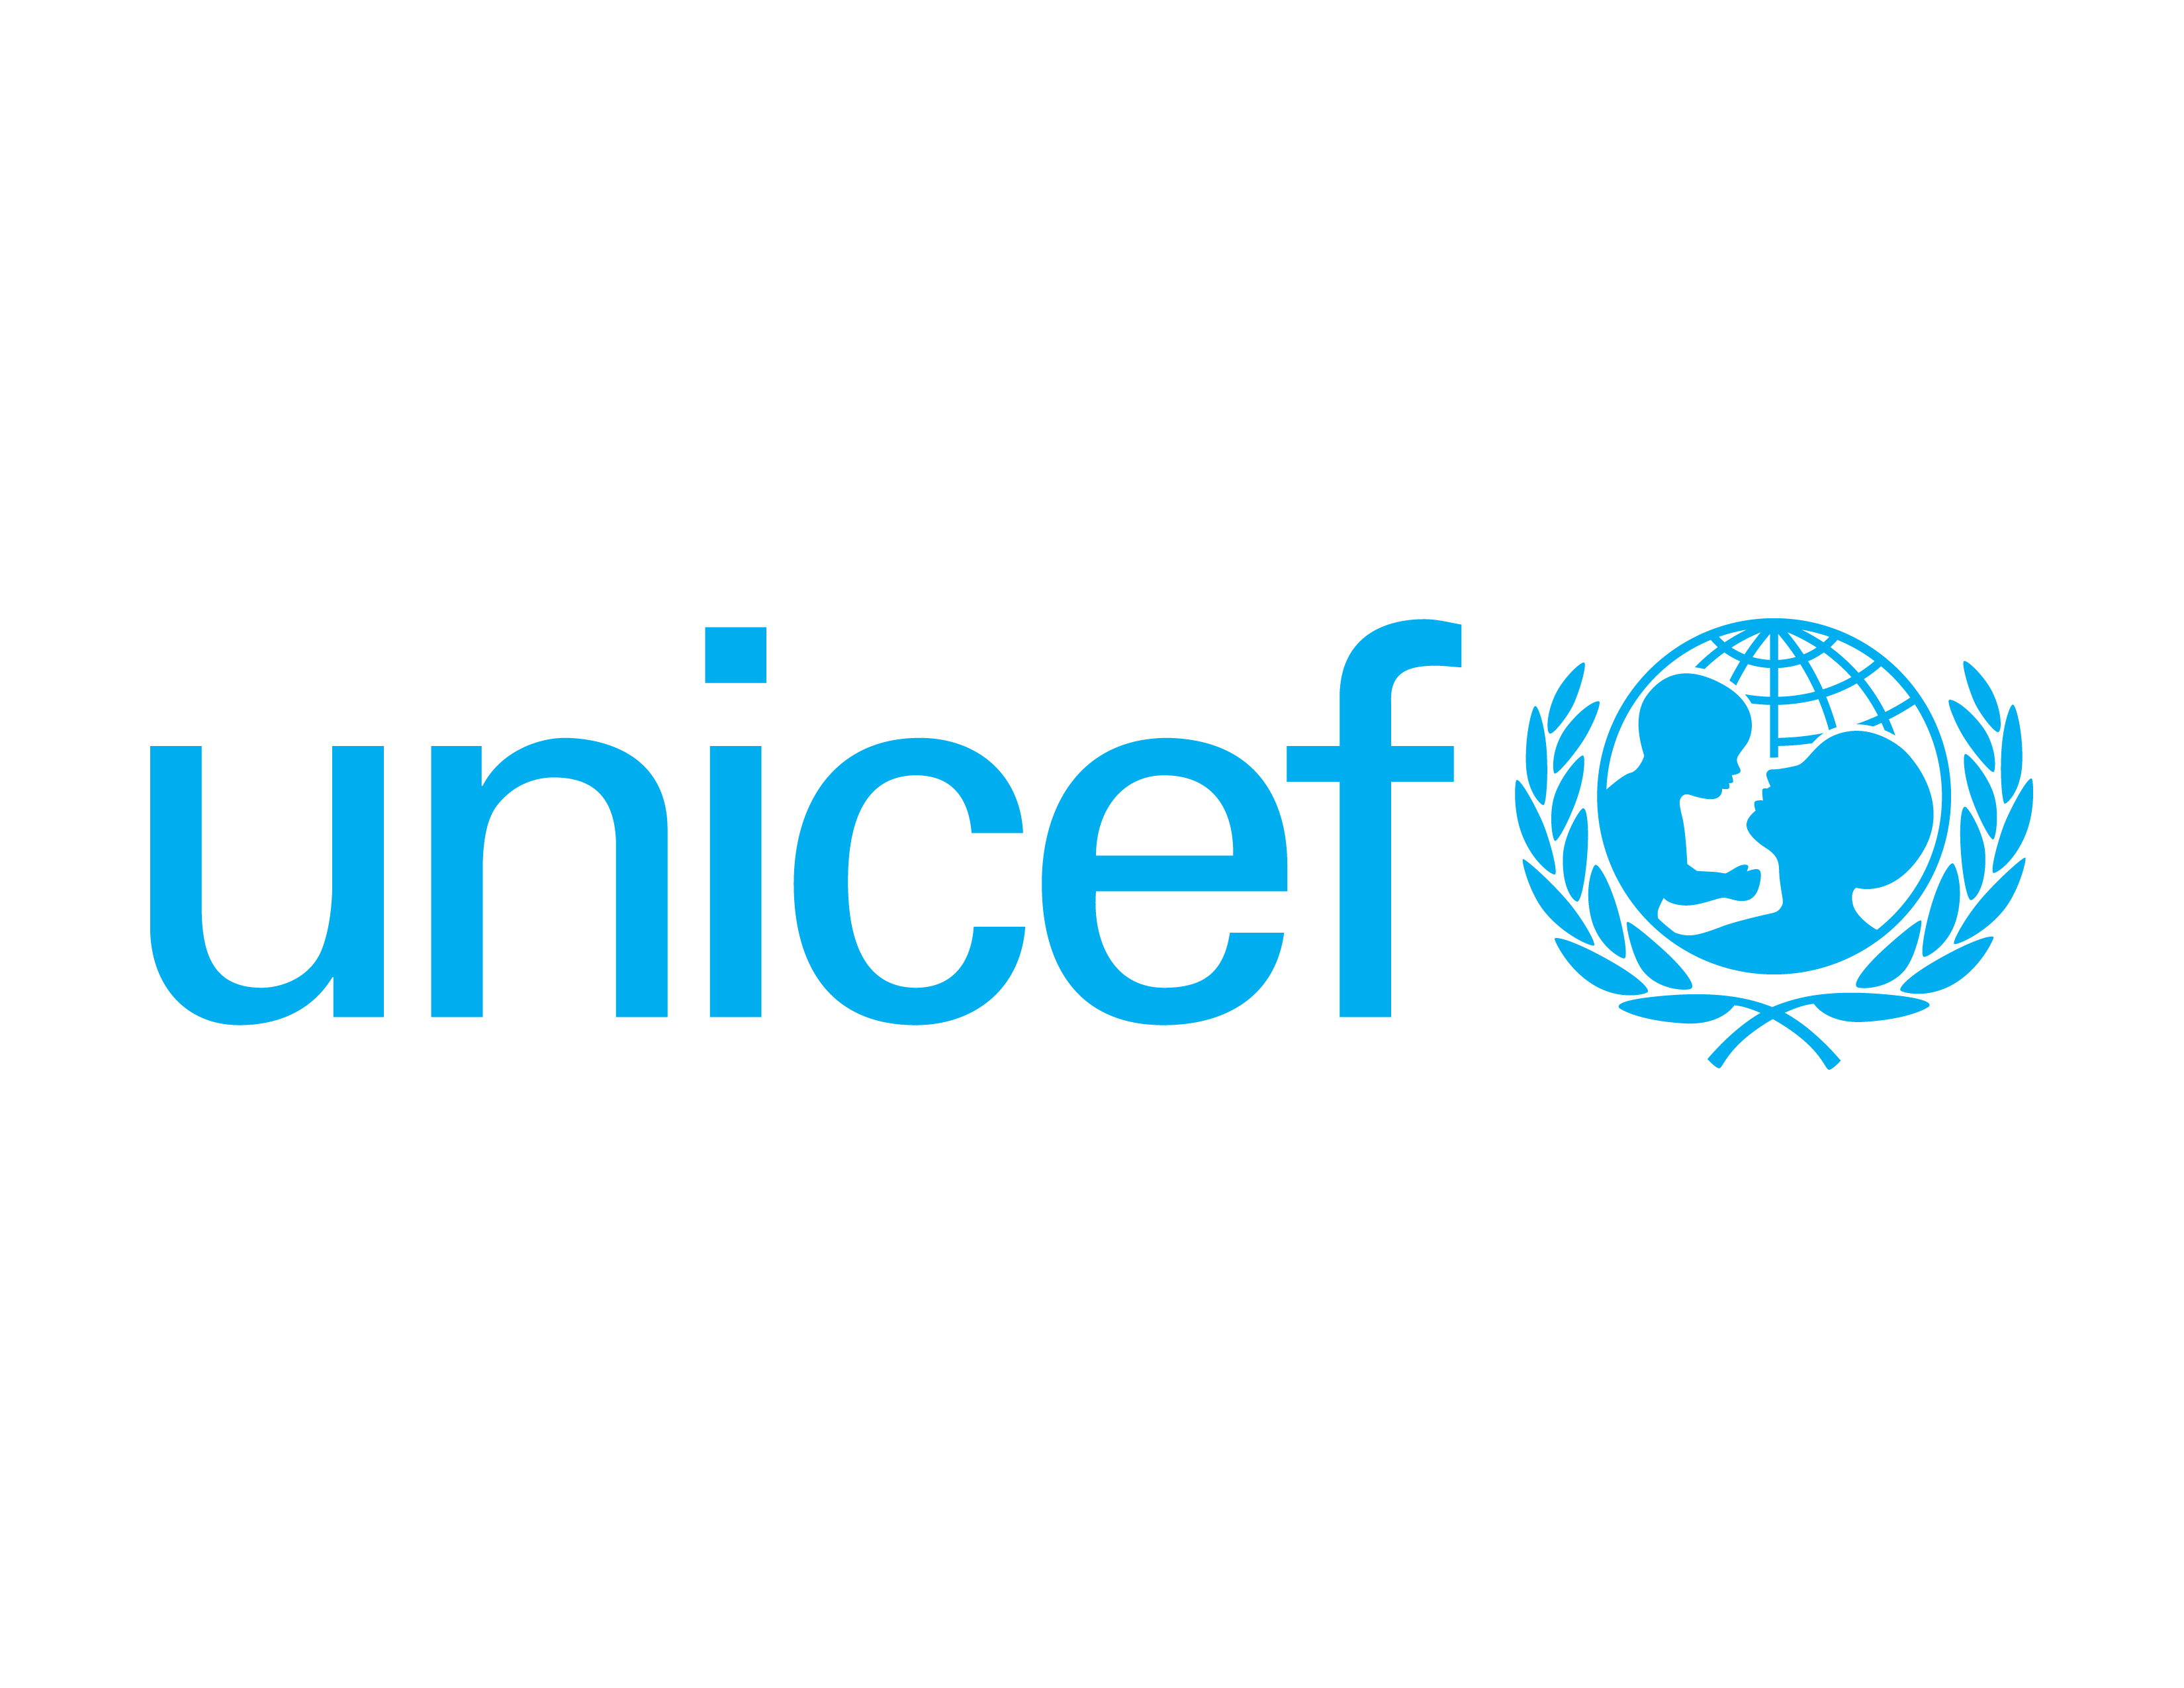 UNICEF starts the new 